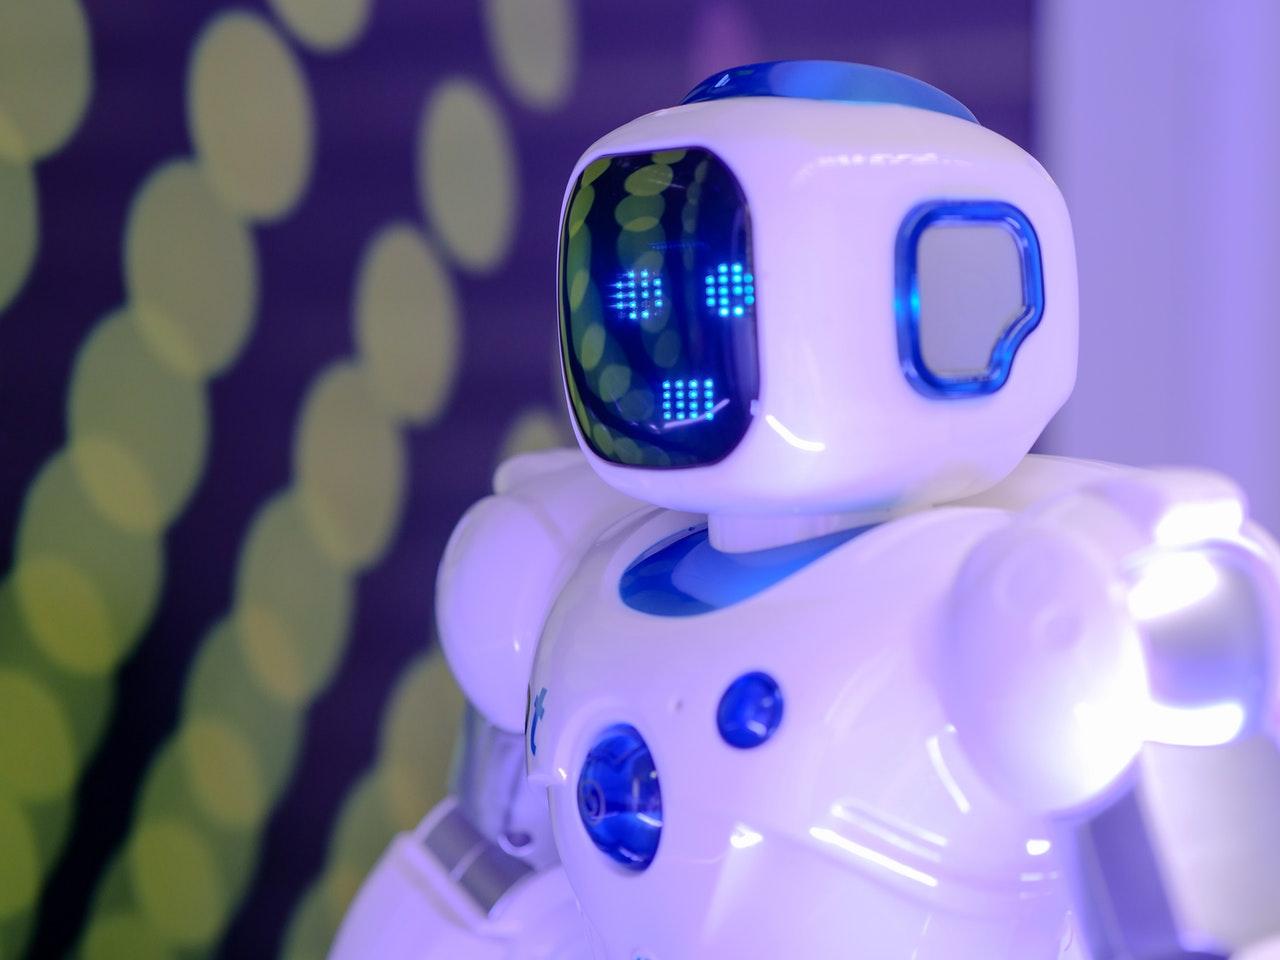 image shows robot representing AI